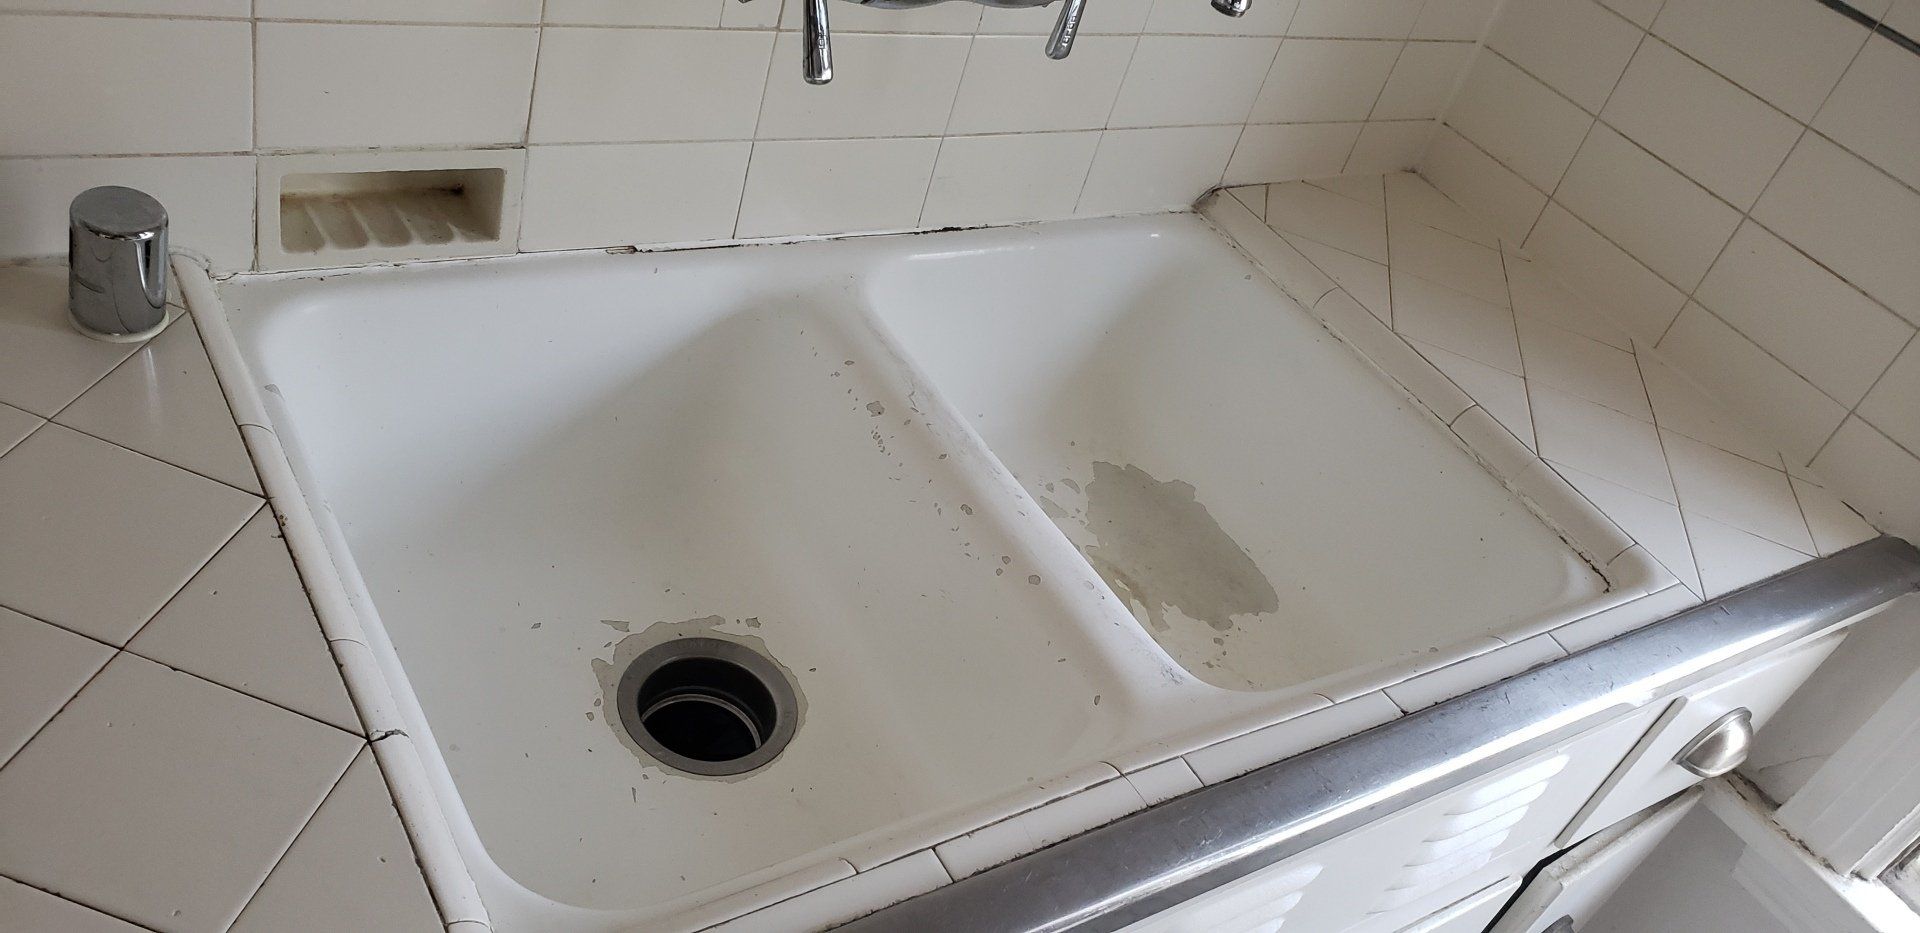 Double Bowl Kitchen Sink Before Reglazing | Mission Hills, CA | Julian's Porcelain & Fiberglass Experts